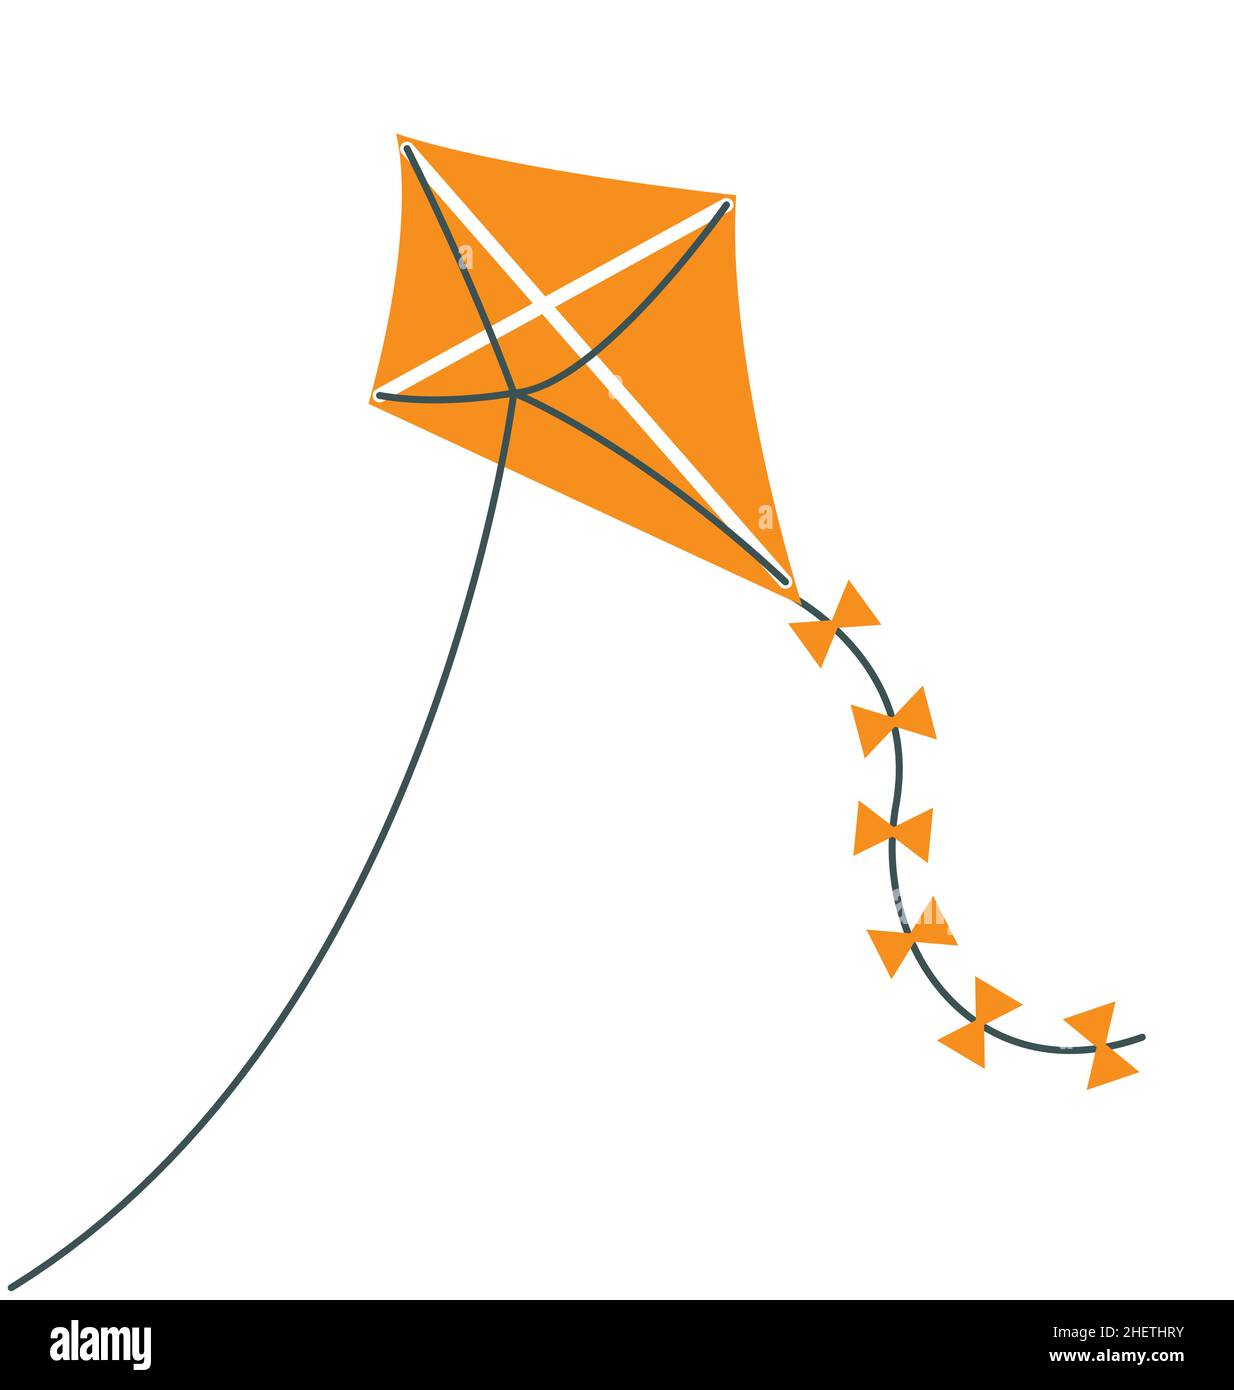 Cometa naranja Imágenes vectoriales de stock - Alamy